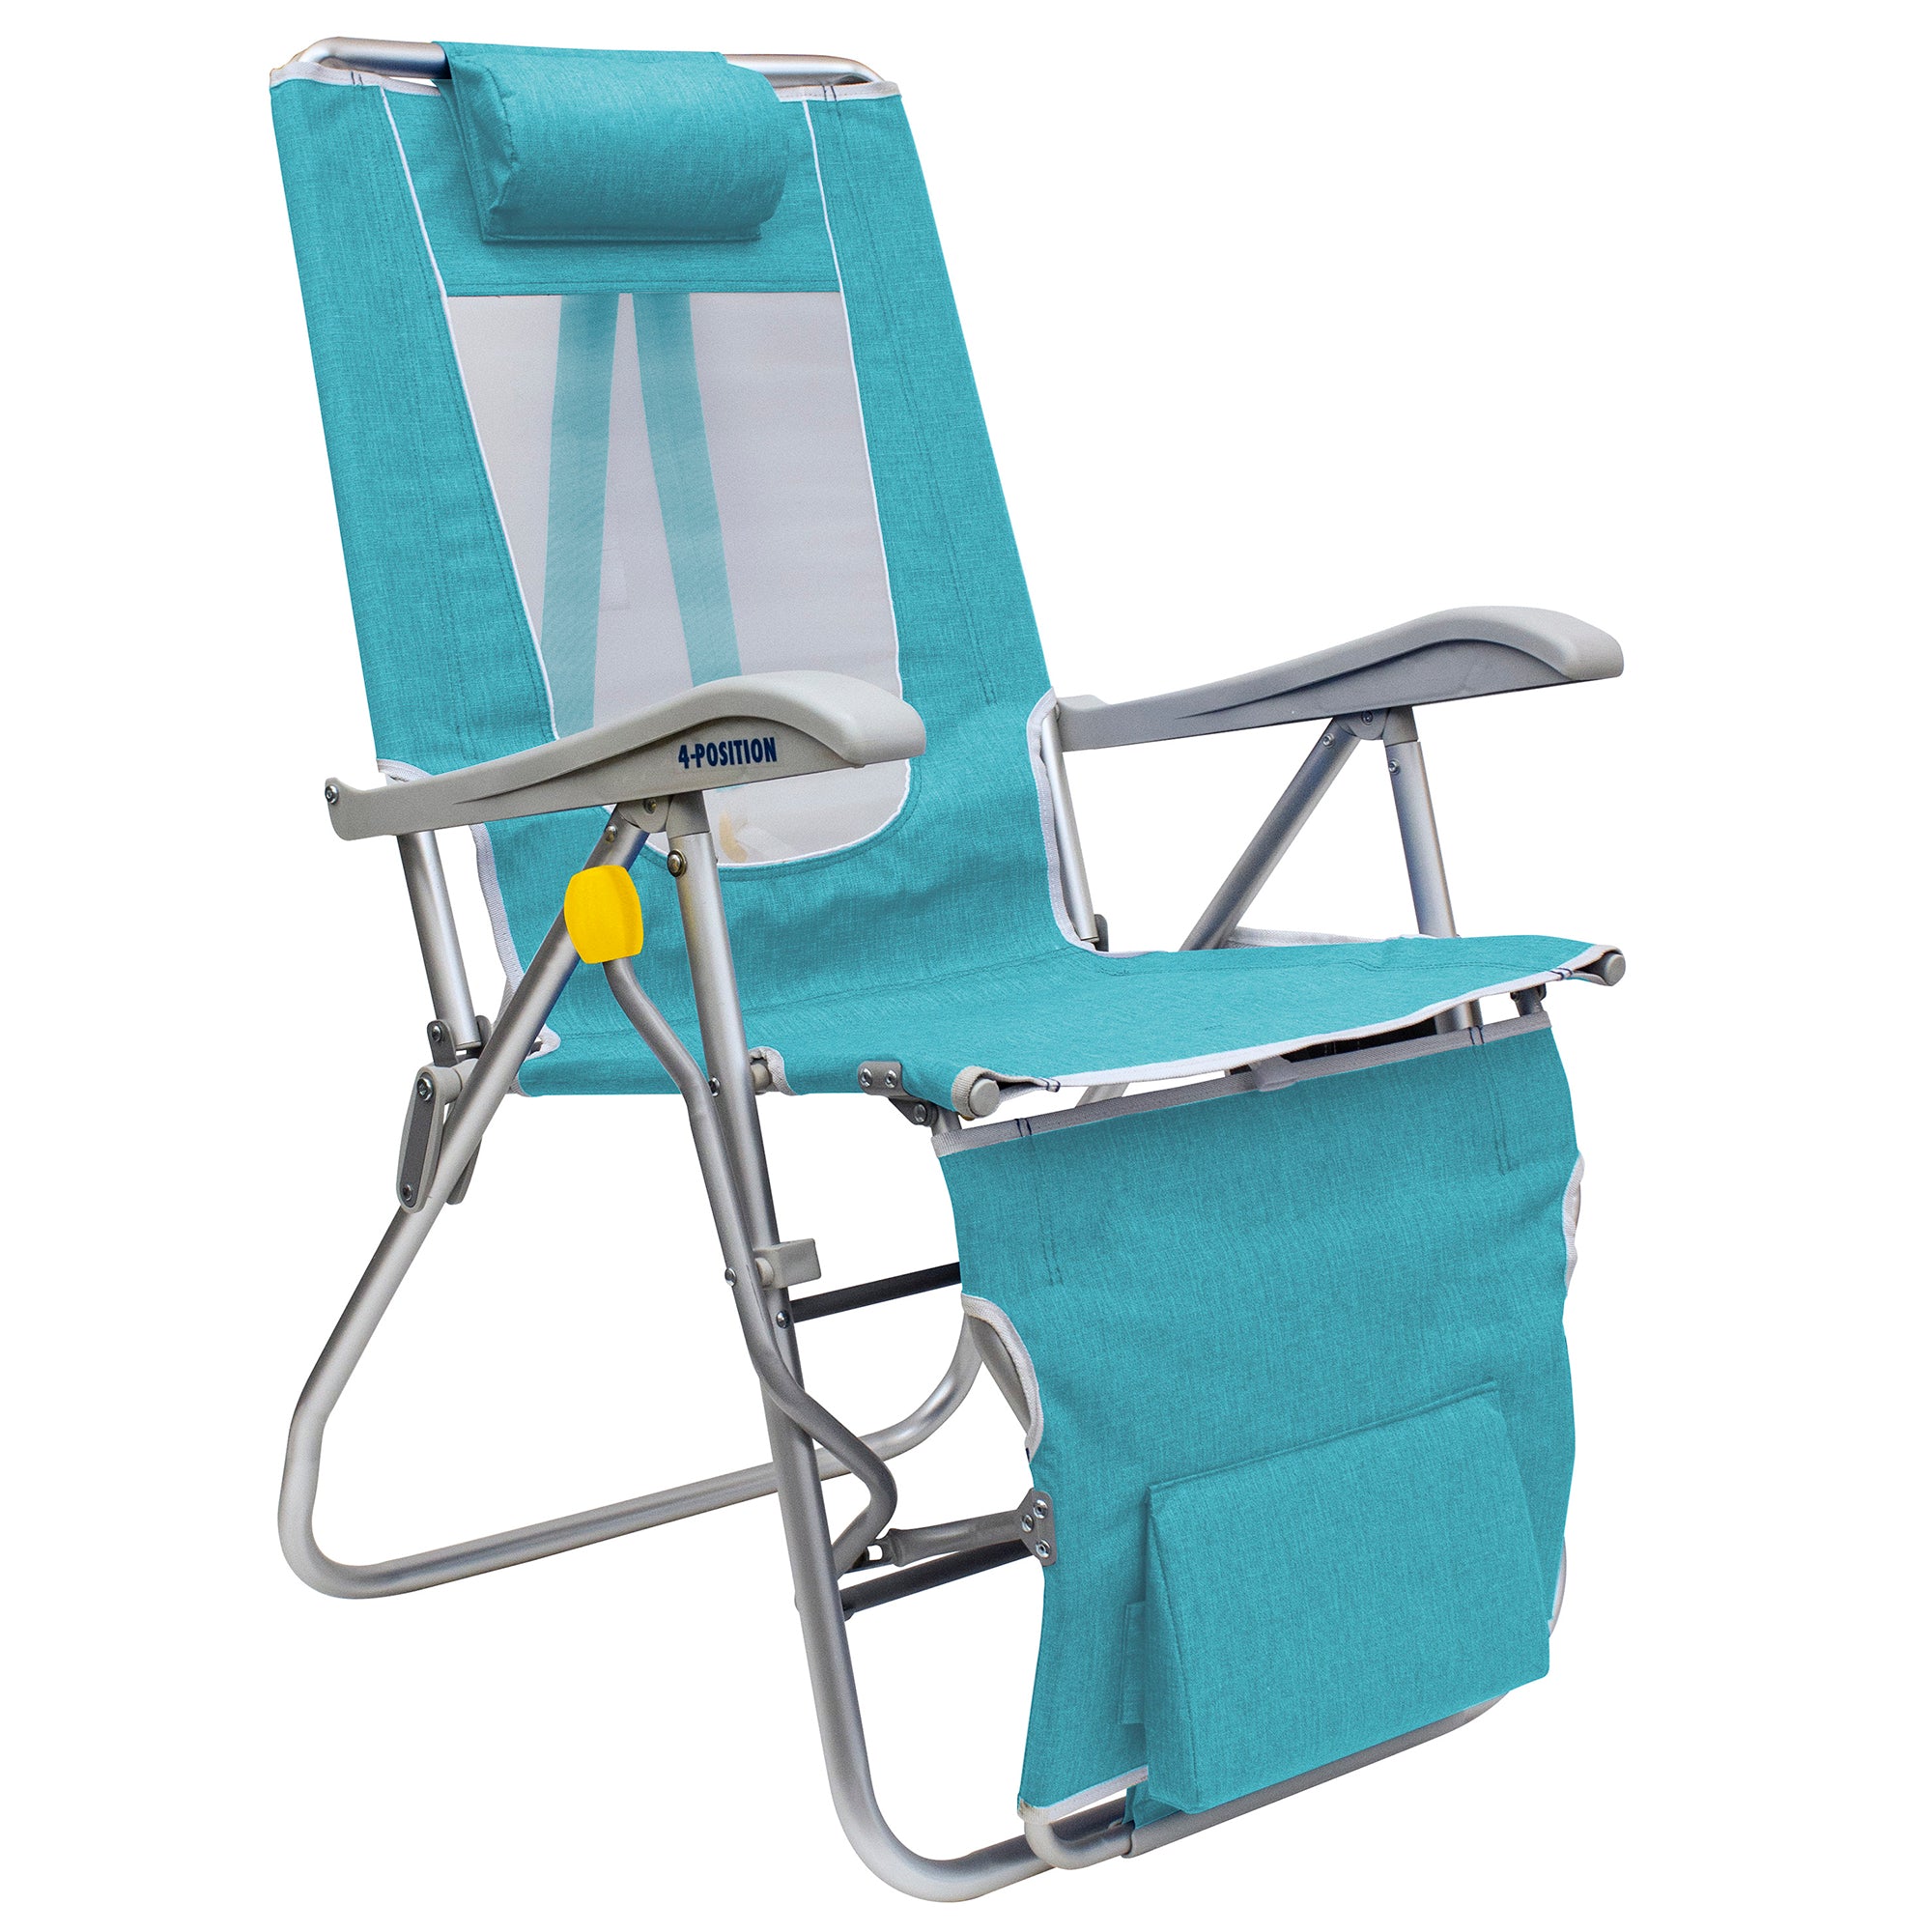 Legz Up Lounger Beach Chair, Heathered Seafoam, Front Legs Down